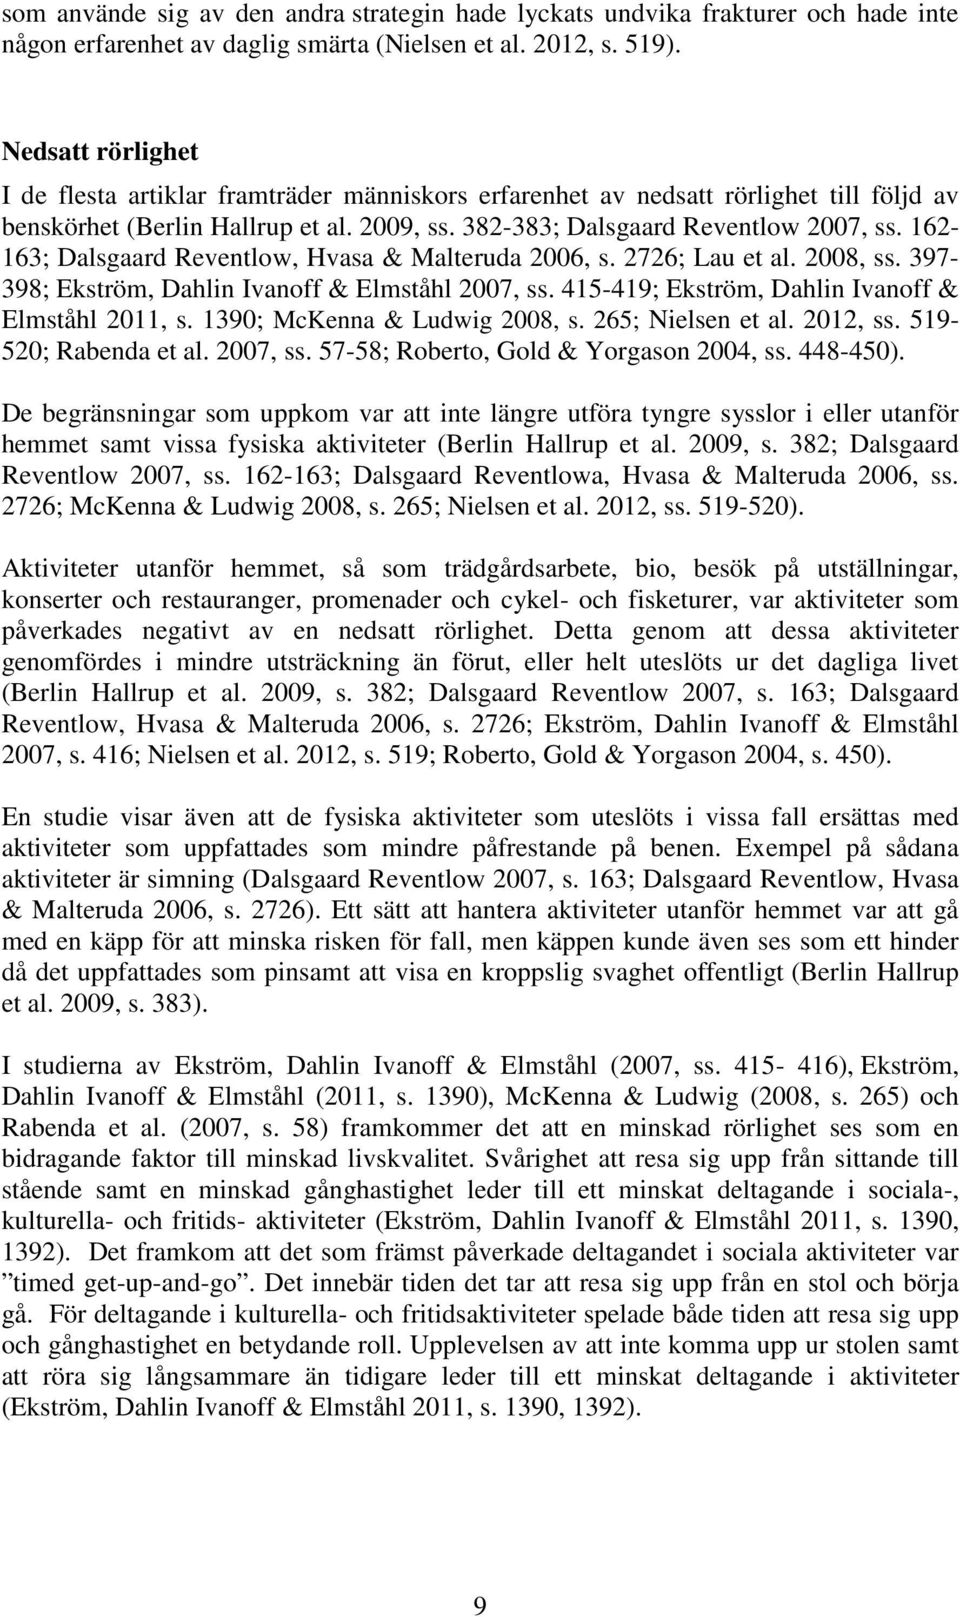 162-163; Dalsgaard Reventlow, Hvasa & Malteruda 2006, s. 2726; Lau et al. 2008, ss. 397-398; Ekström, Dahlin Ivanoff & Elmståhl 2007, ss. 415-419; Ekström, Dahlin Ivanoff & Elmståhl 2011, s.